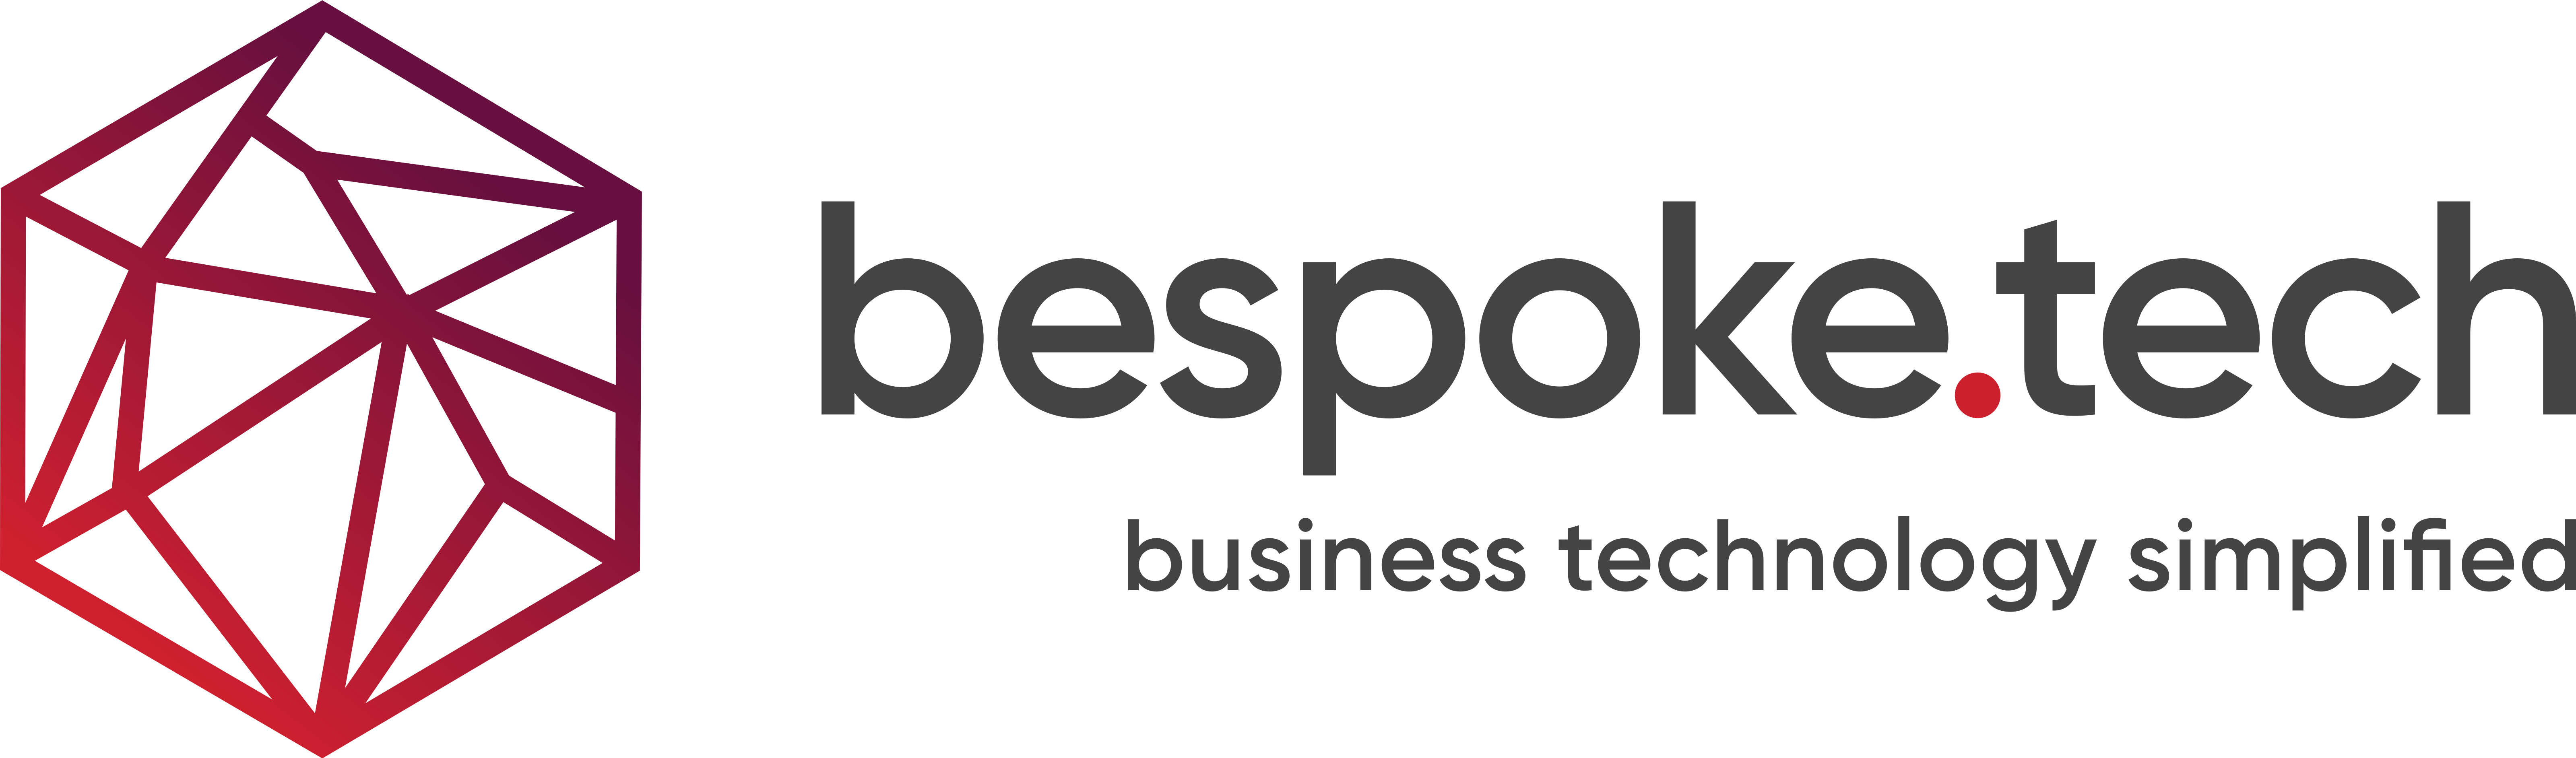 Bespoke Technology IT Services & Support logo